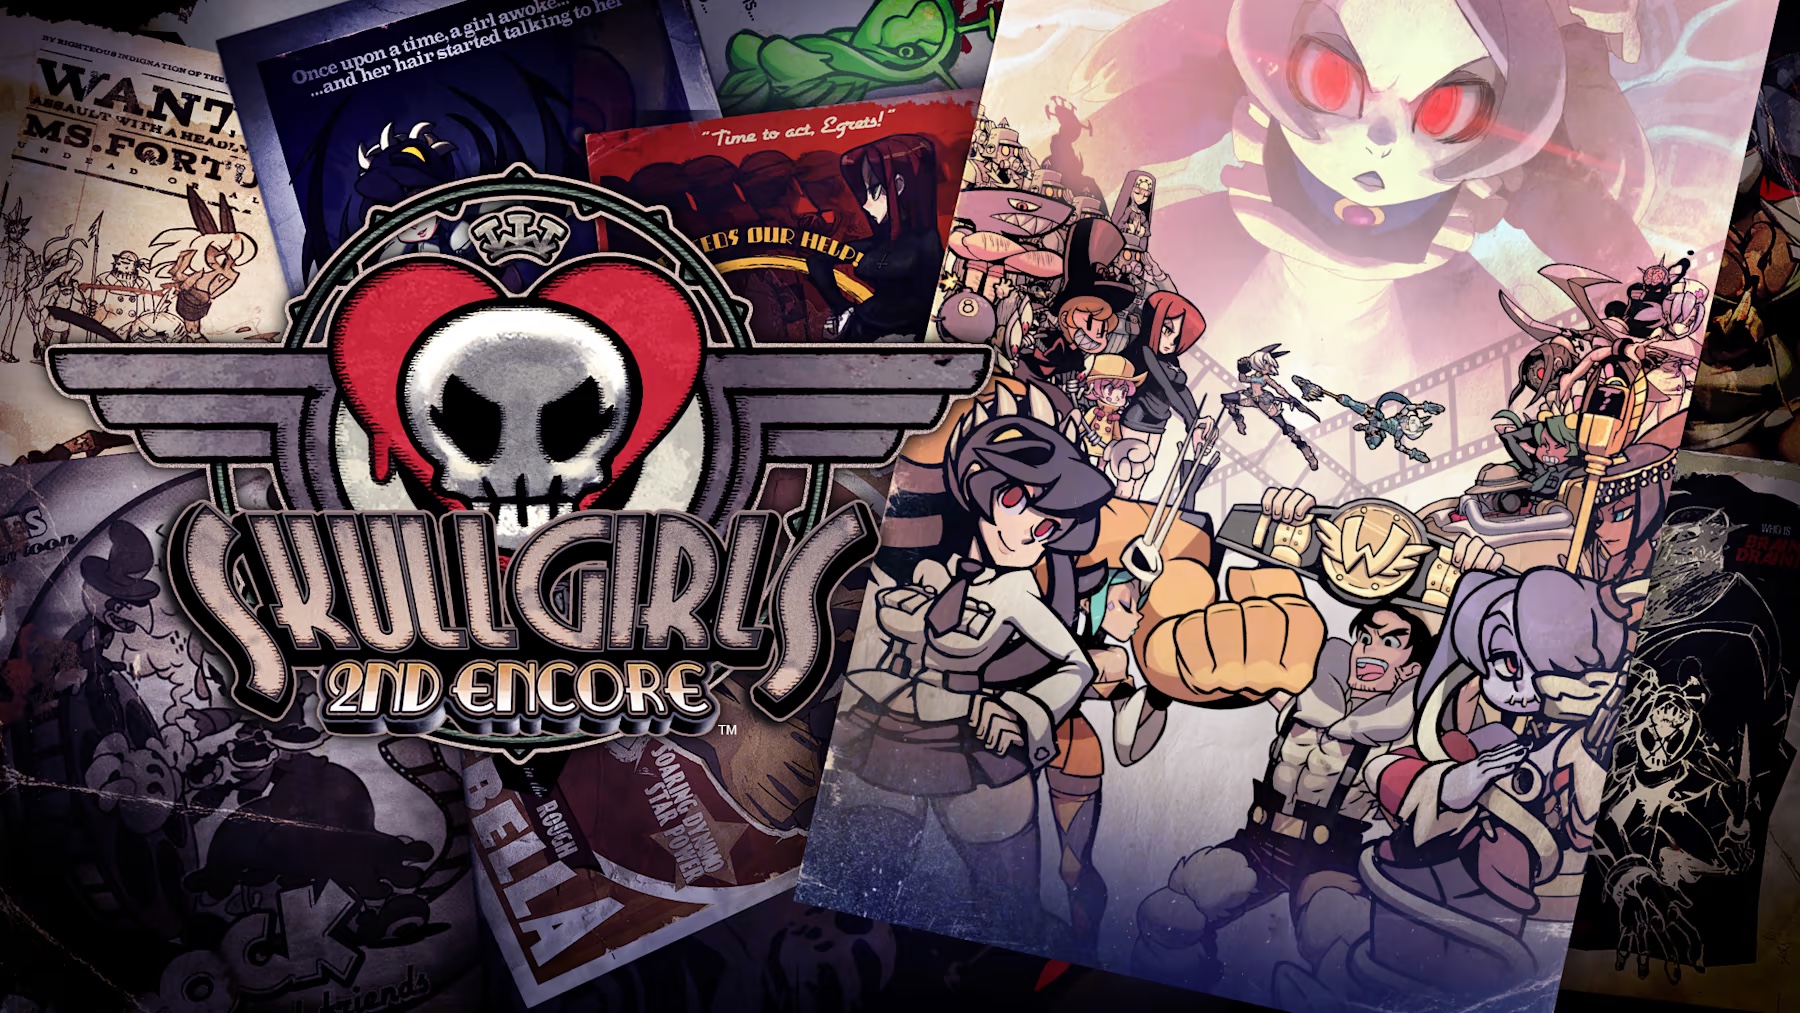 skullgirls-2nd-encore-nintendo-switch-fighting-game.jpg